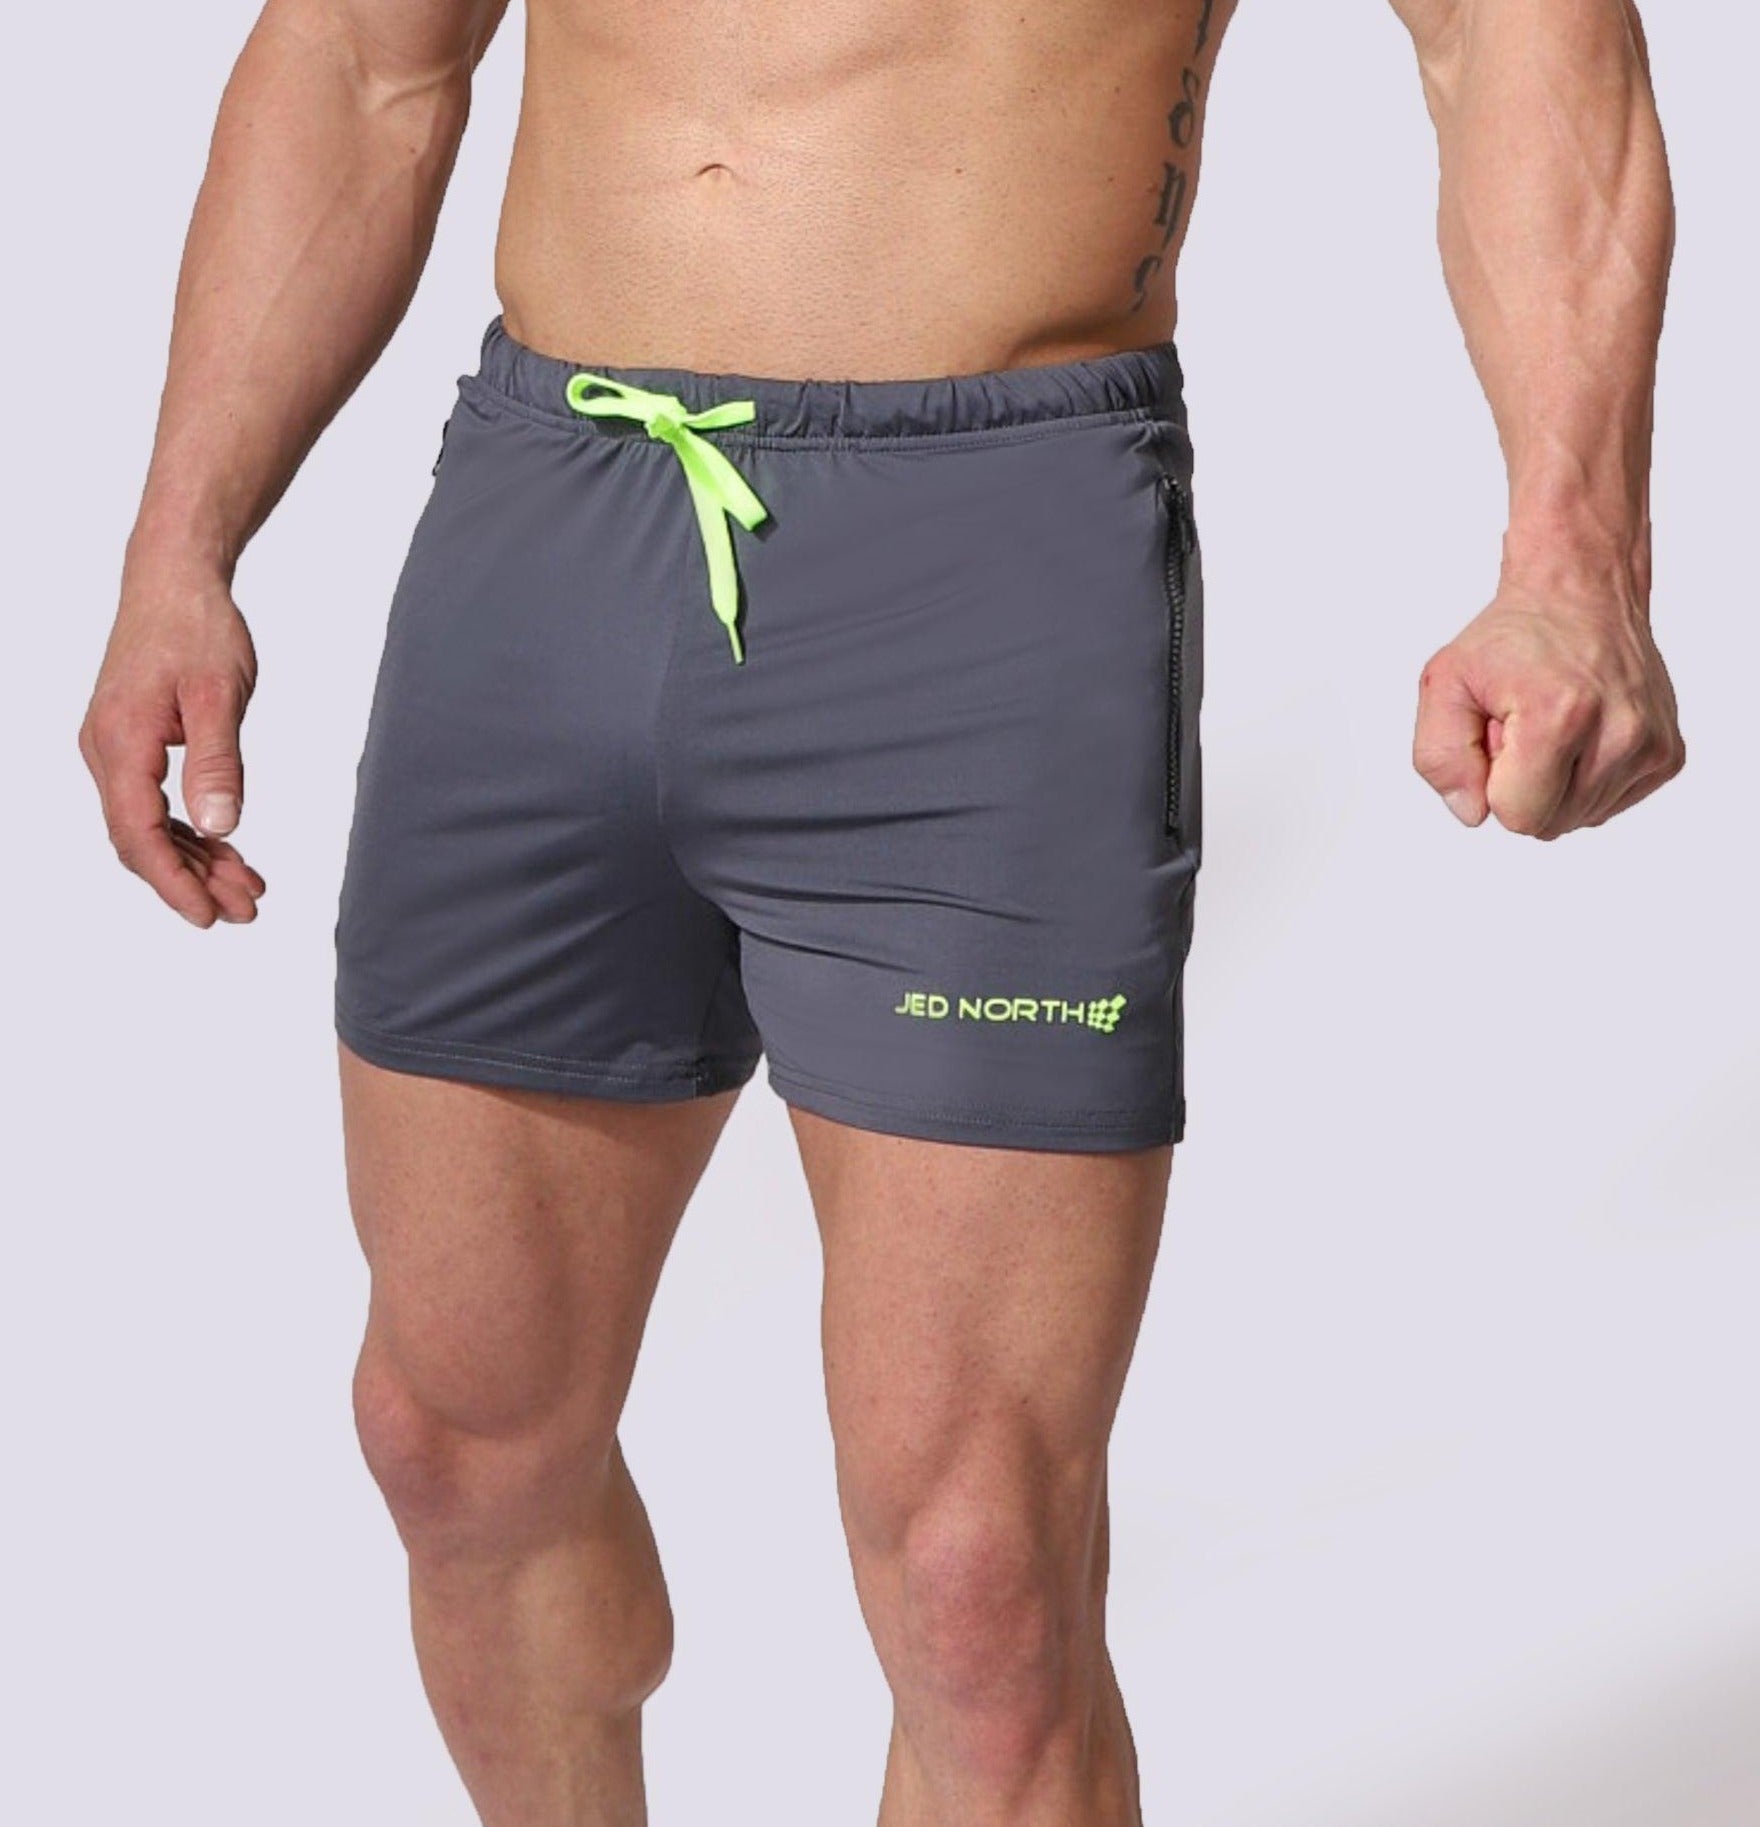 Men's Bodybuilding Lift Shorts w Zipper Pockets - Gray (1337546178607)